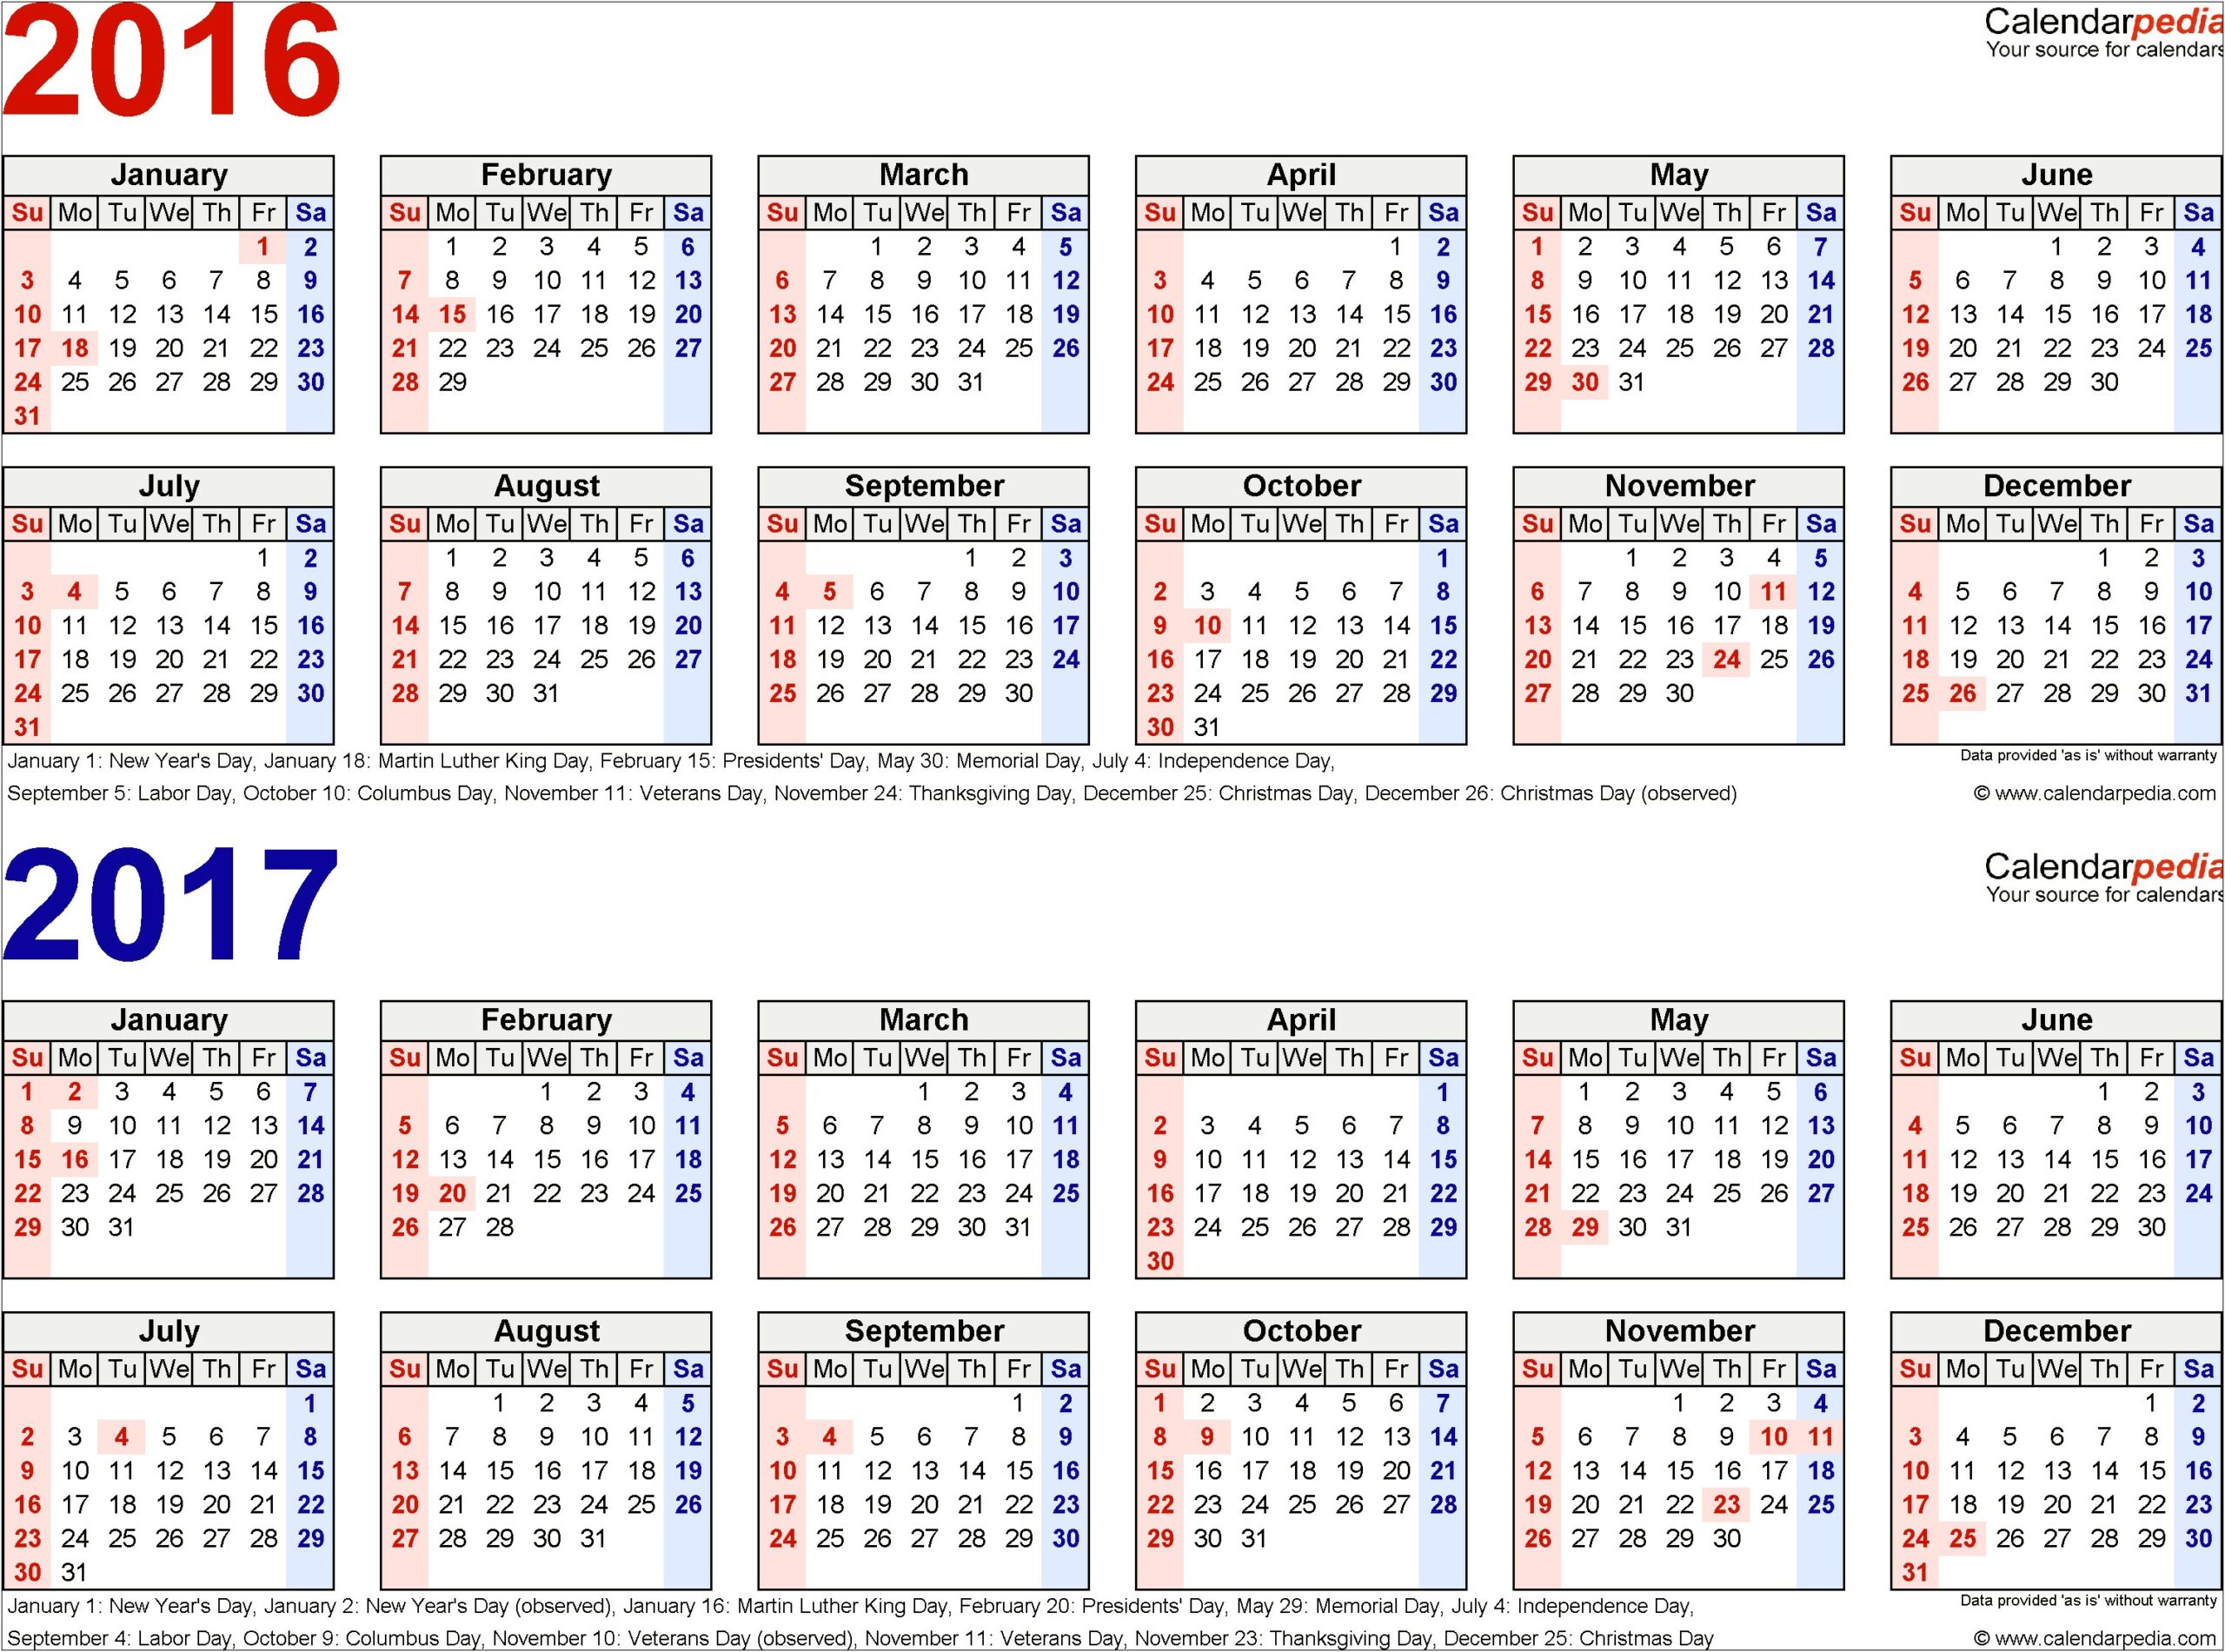 Free Fiscal Year 2014 Calendar Template